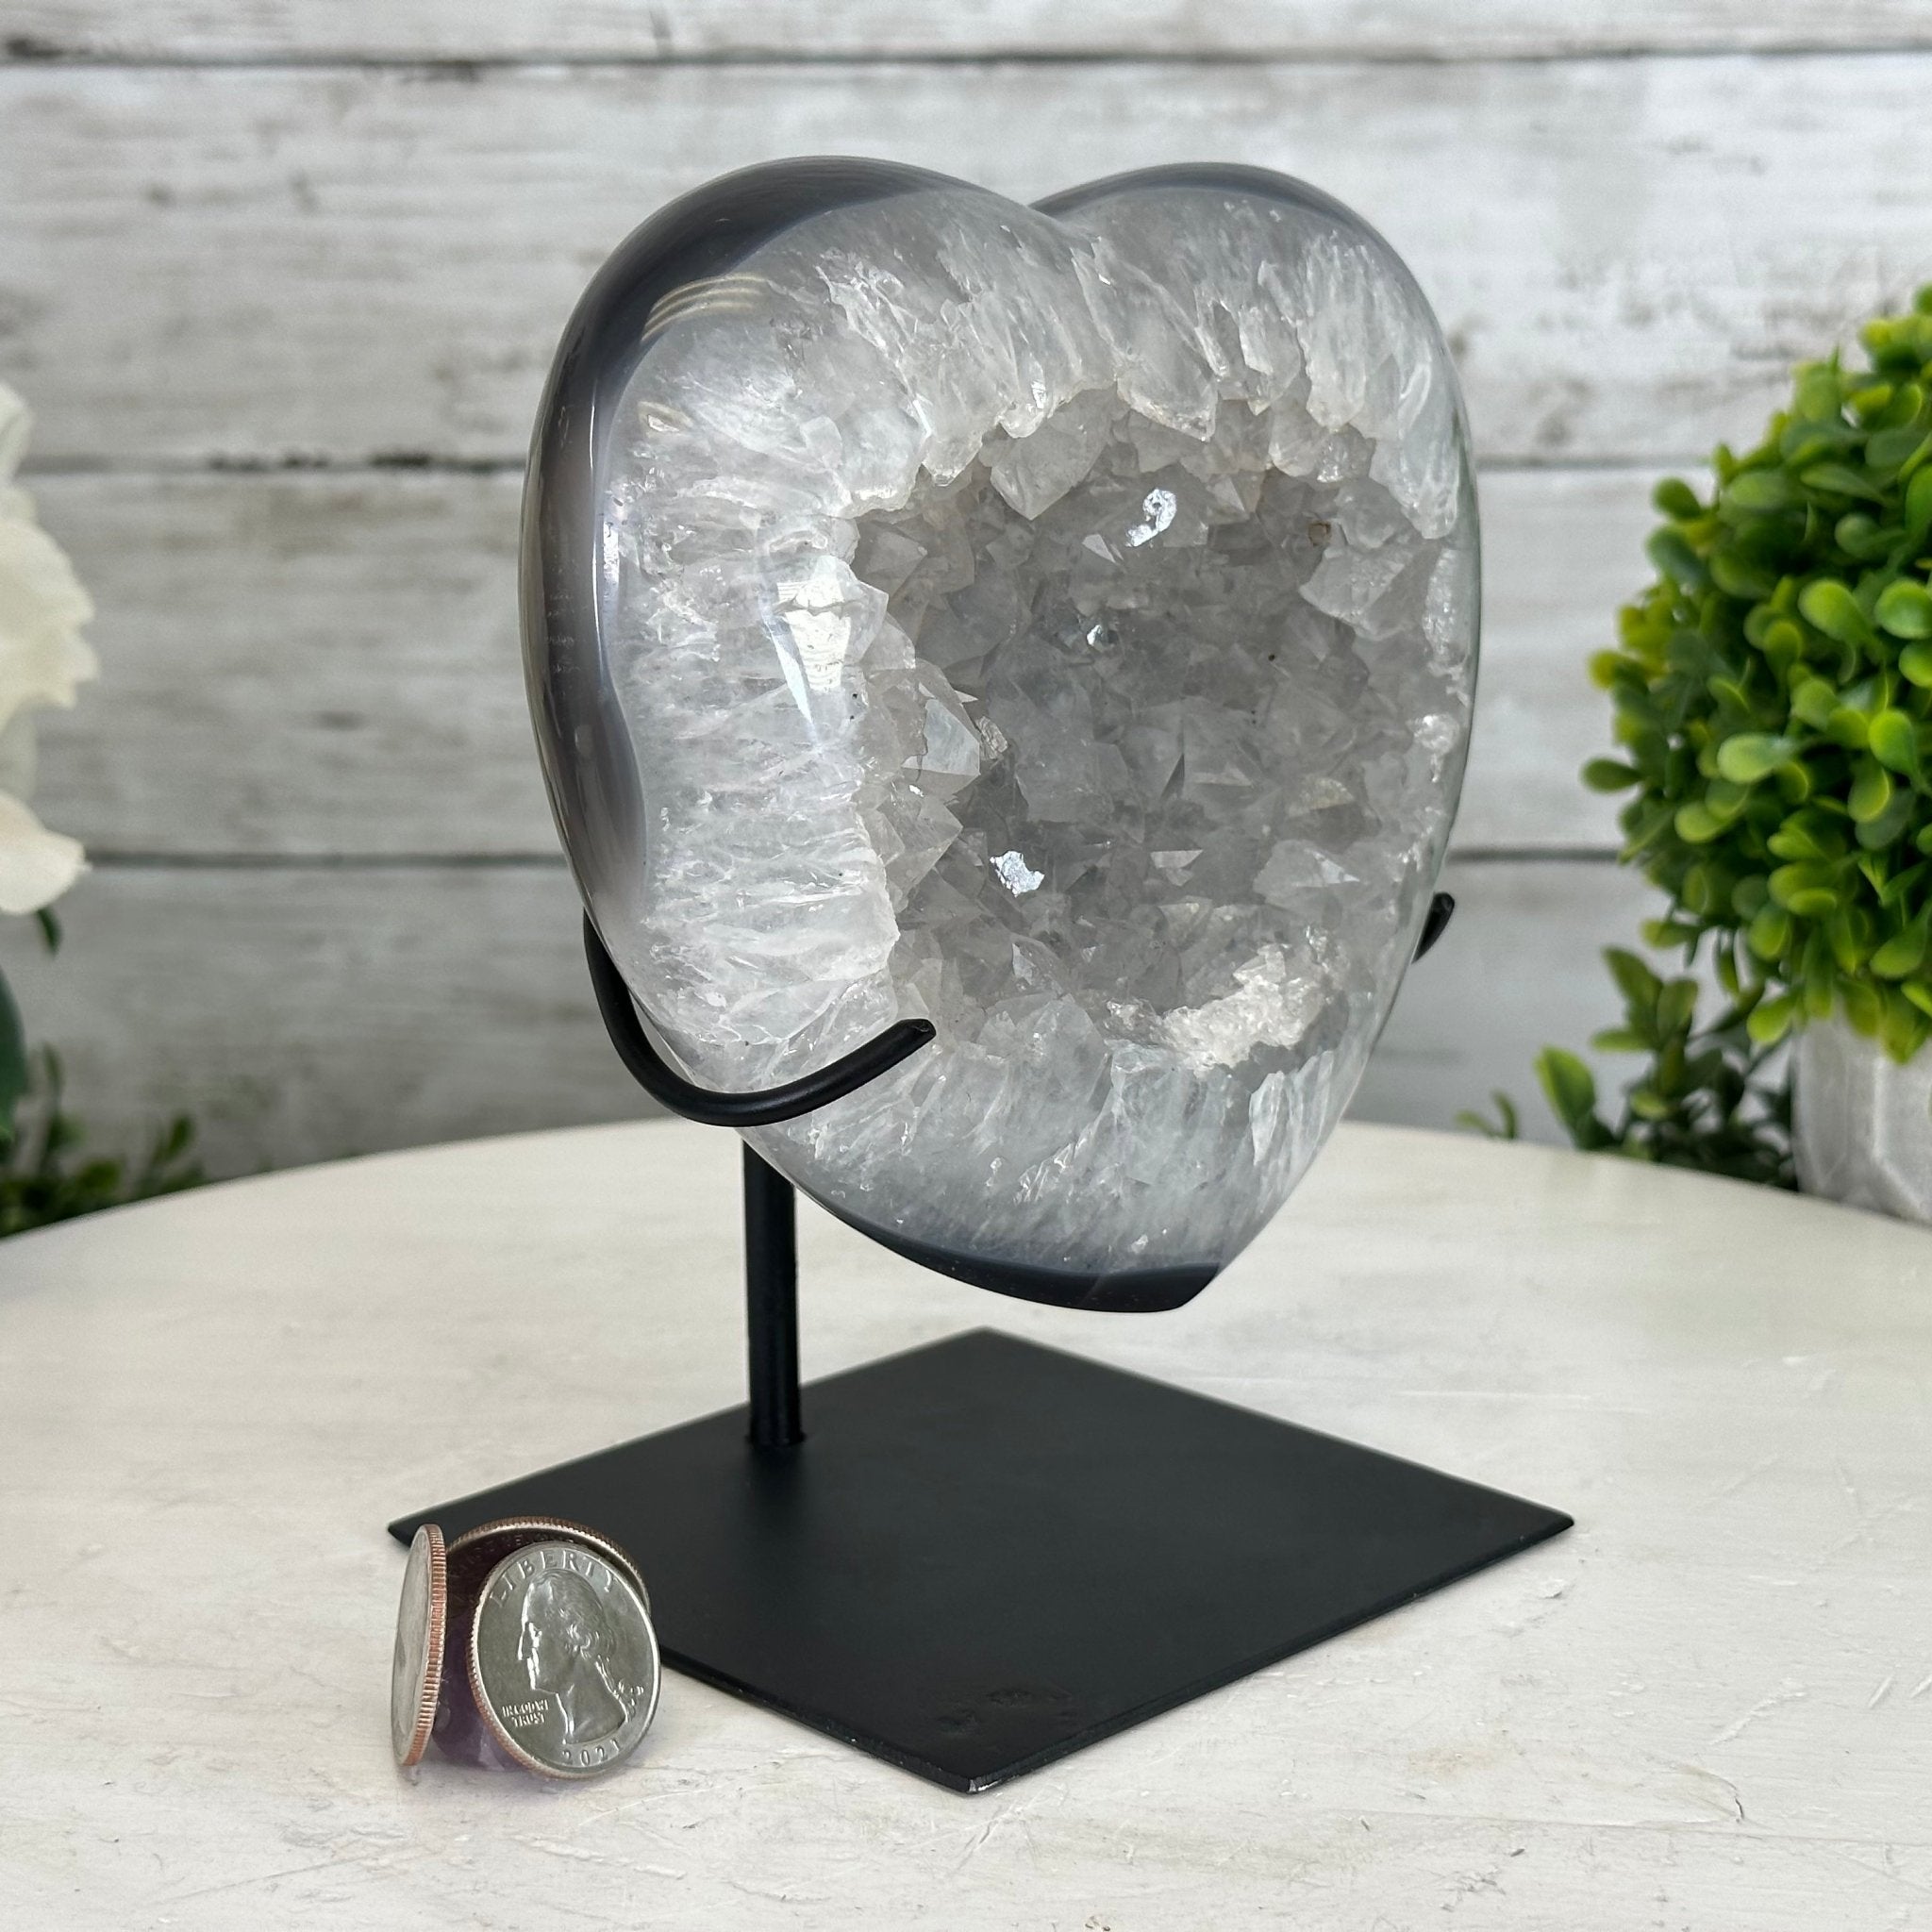 Polished Agate Heart Geode on a Metal Stand, 3.7 lbs & 6.4" Tall, Model #5468-0073 by Brazil Gems - Brazil GemsBrazil GemsPolished Agate Heart Geode on a Metal Stand, 3.7 lbs & 6.4" Tall, Model #5468-0073 by Brazil GemsHearts5468-0073